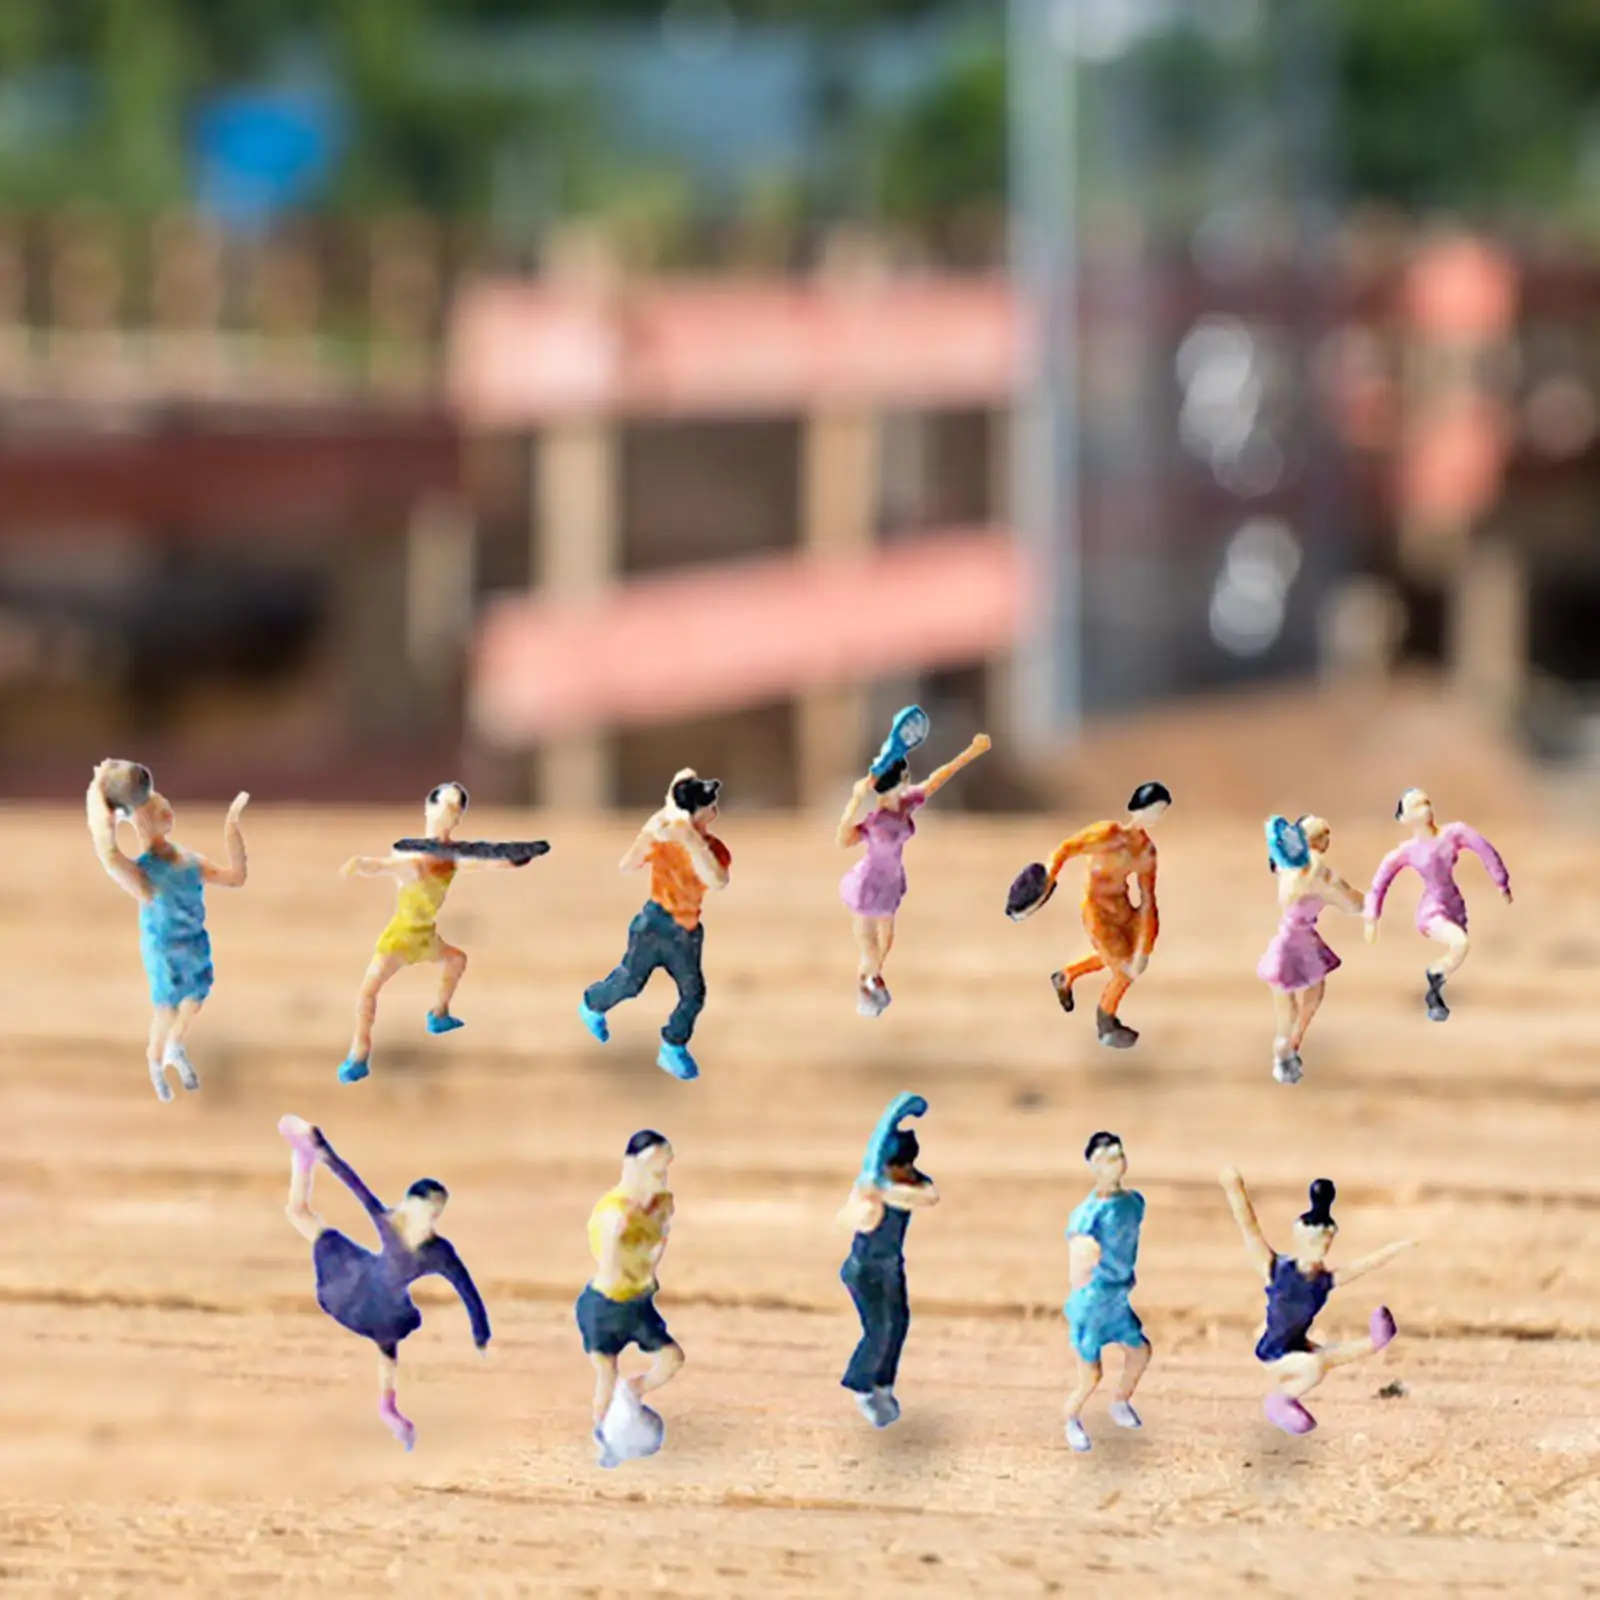 Miniature Sport Player Figurines Miniature Model Figures for Sand Table Layout Decoration Dollhouse Decor